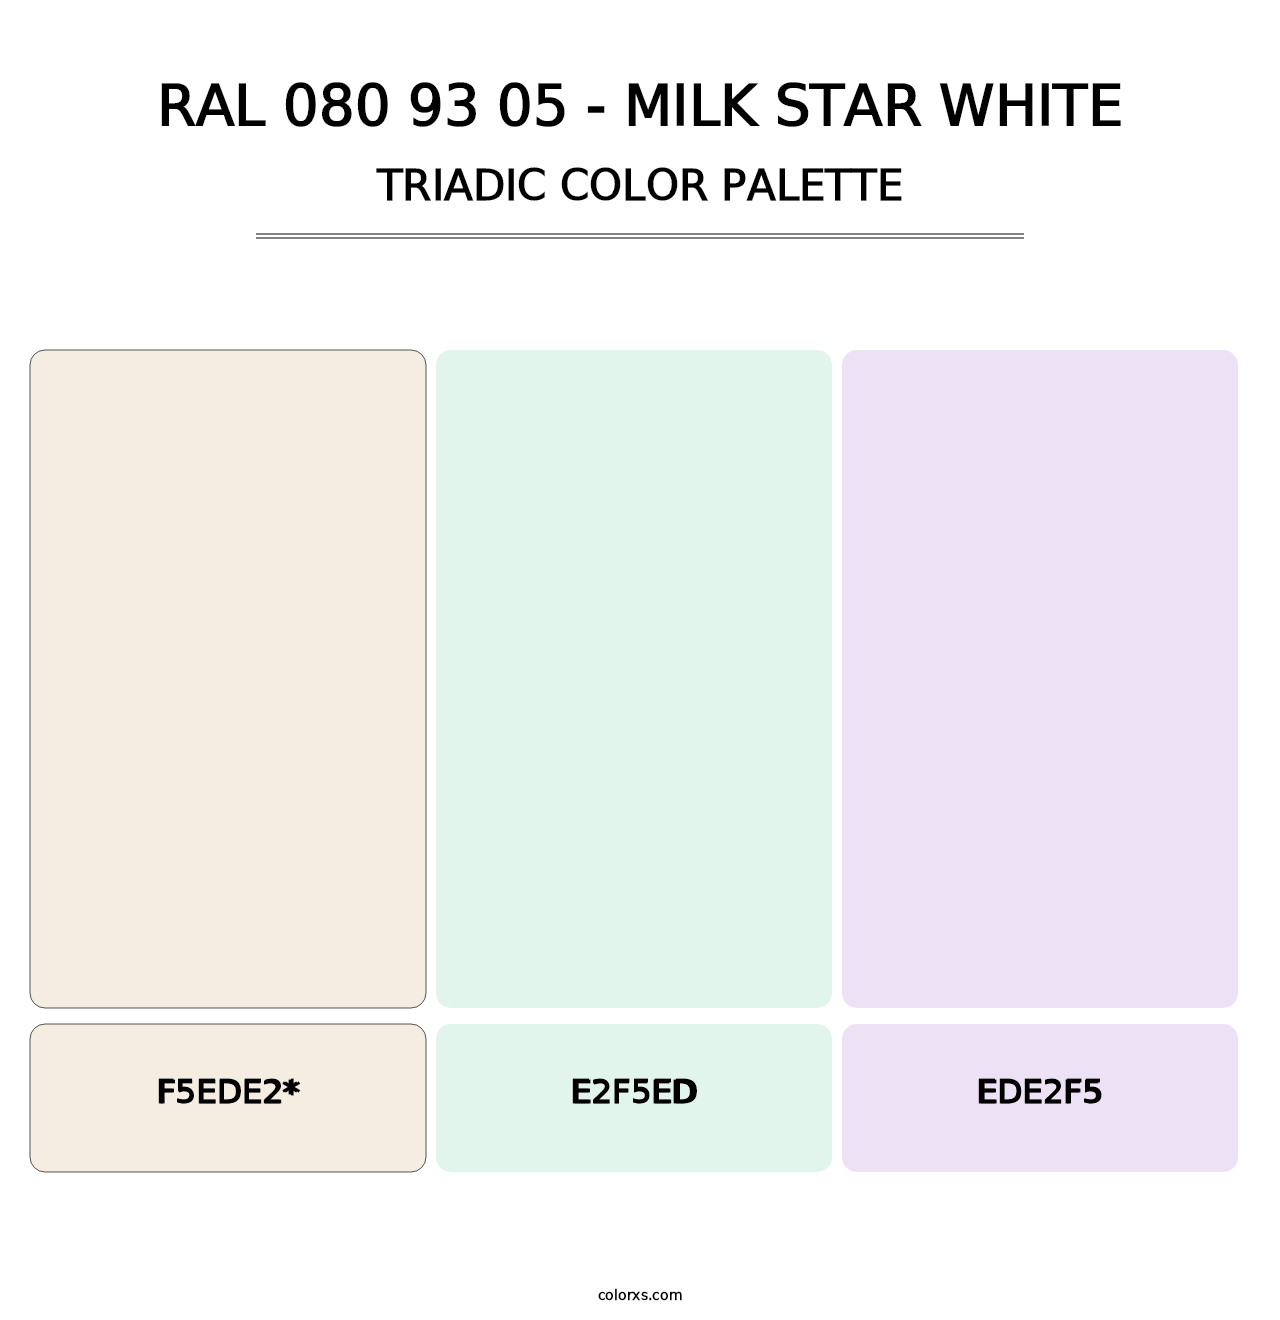 RAL 080 93 05 - Milk Star White - Triadic Color Palette